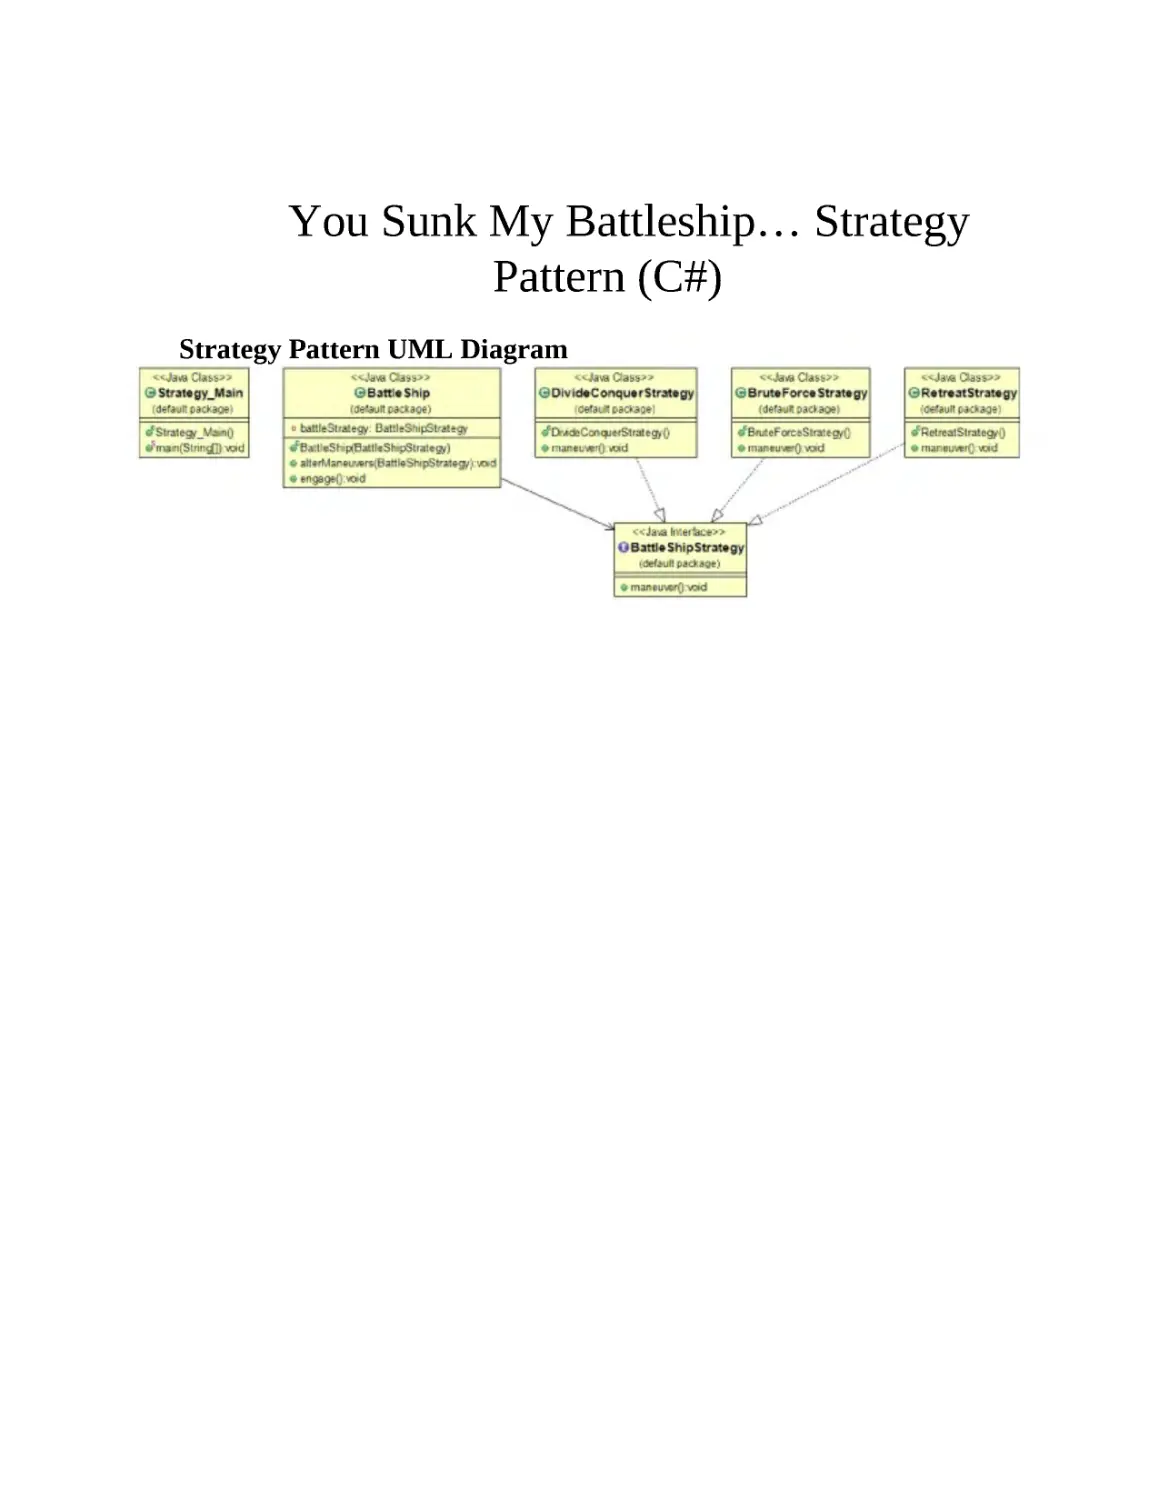 ﻿You Sunk My Battleship… Strategy Pattern øC#